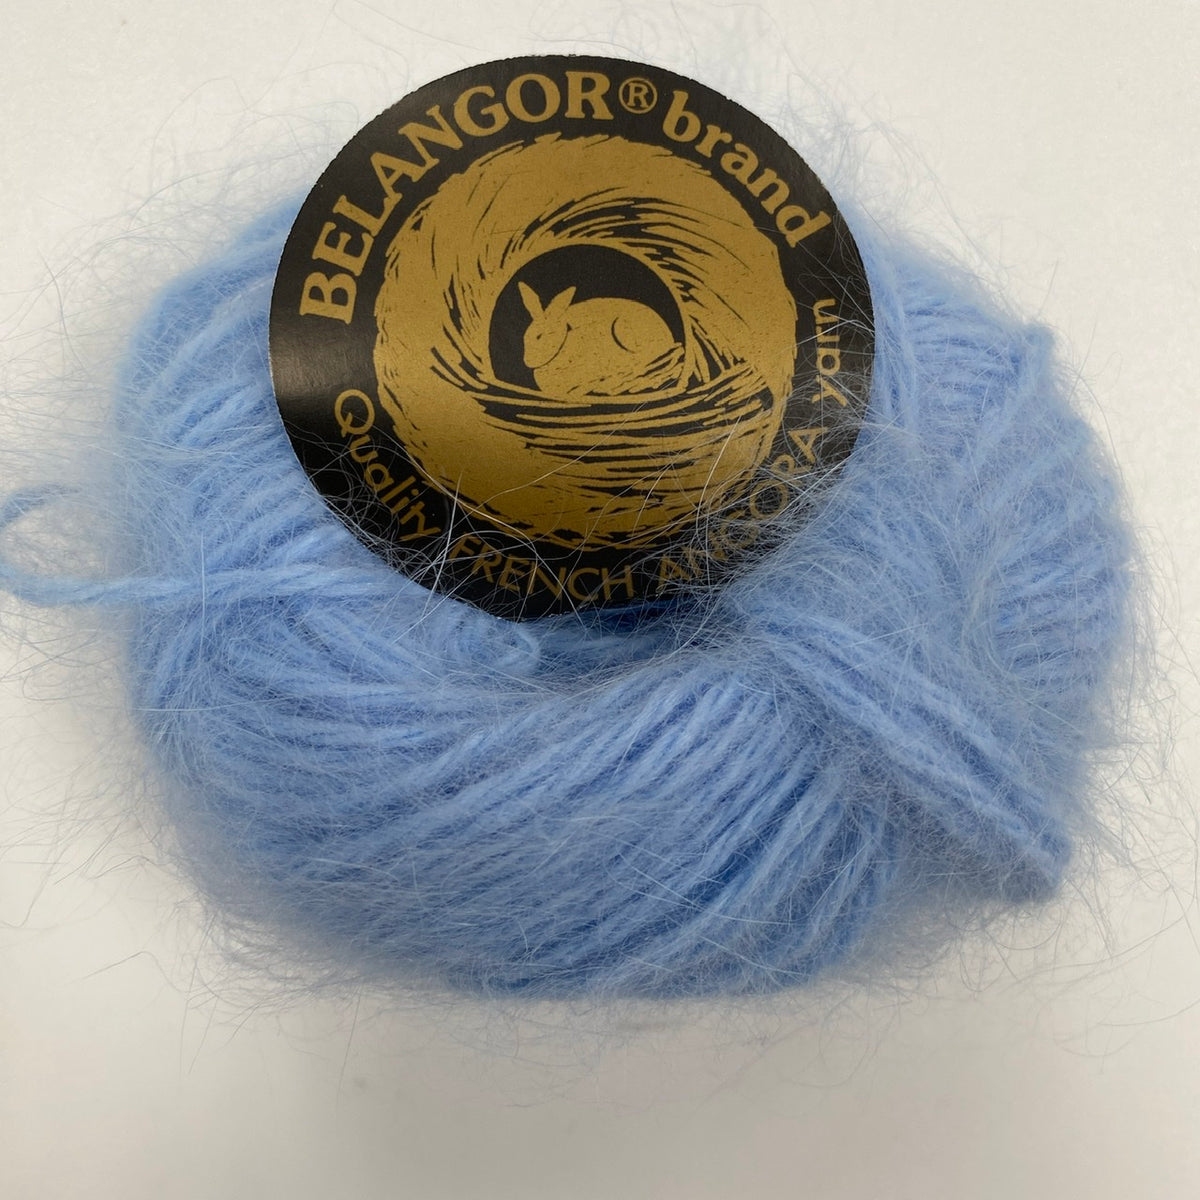 Belangor Angora – The Yarn Club, Inc